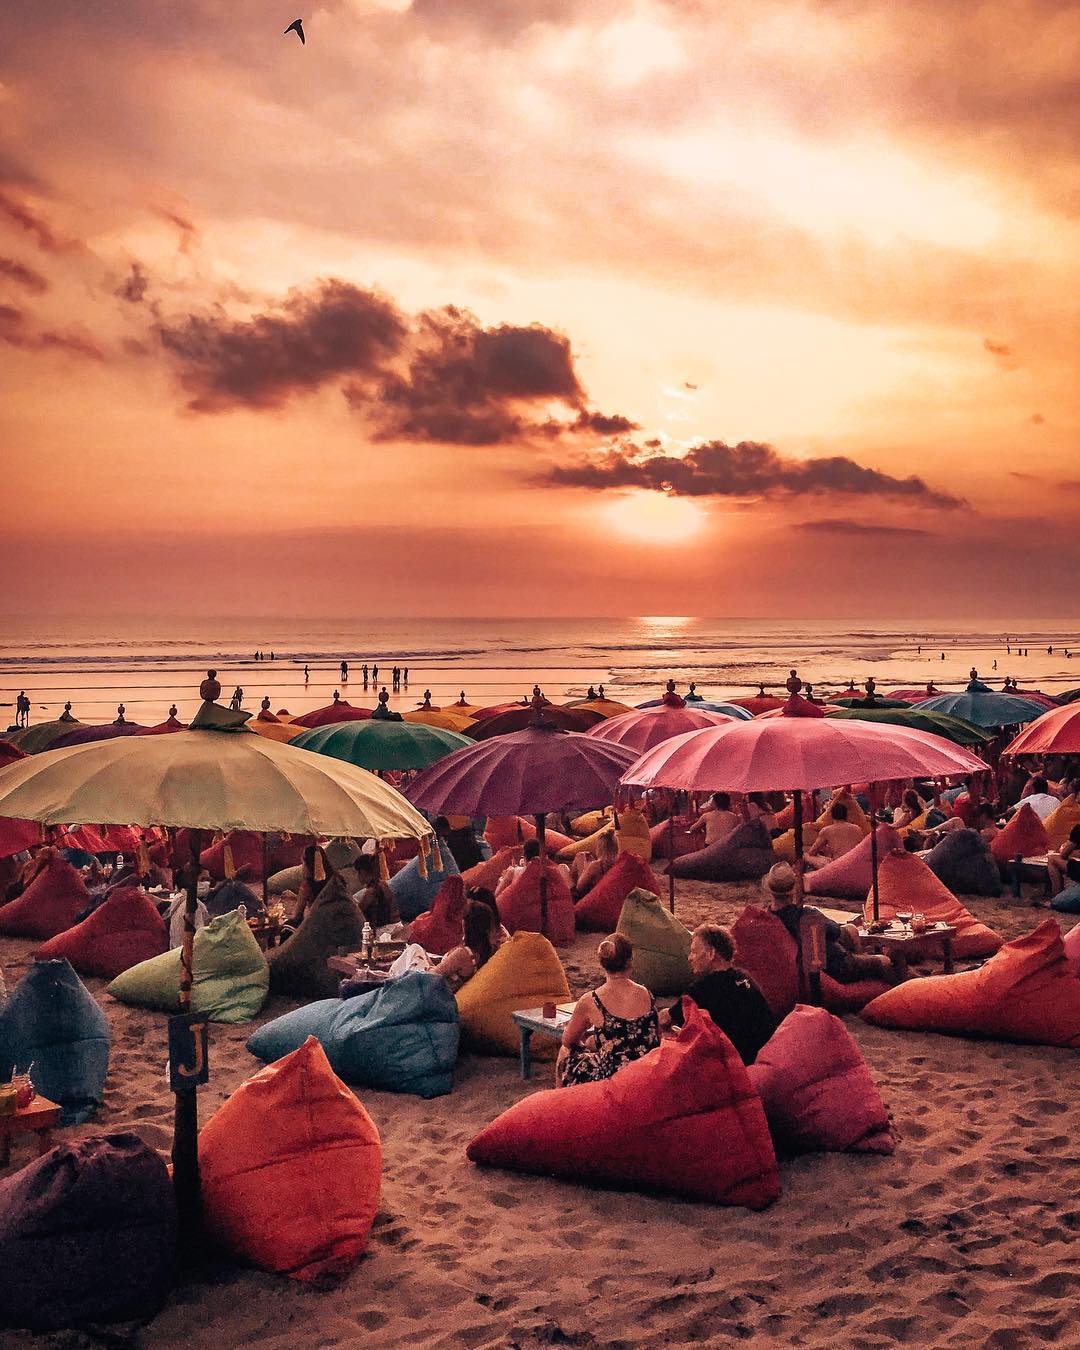 Sunset in Bali; La Planca